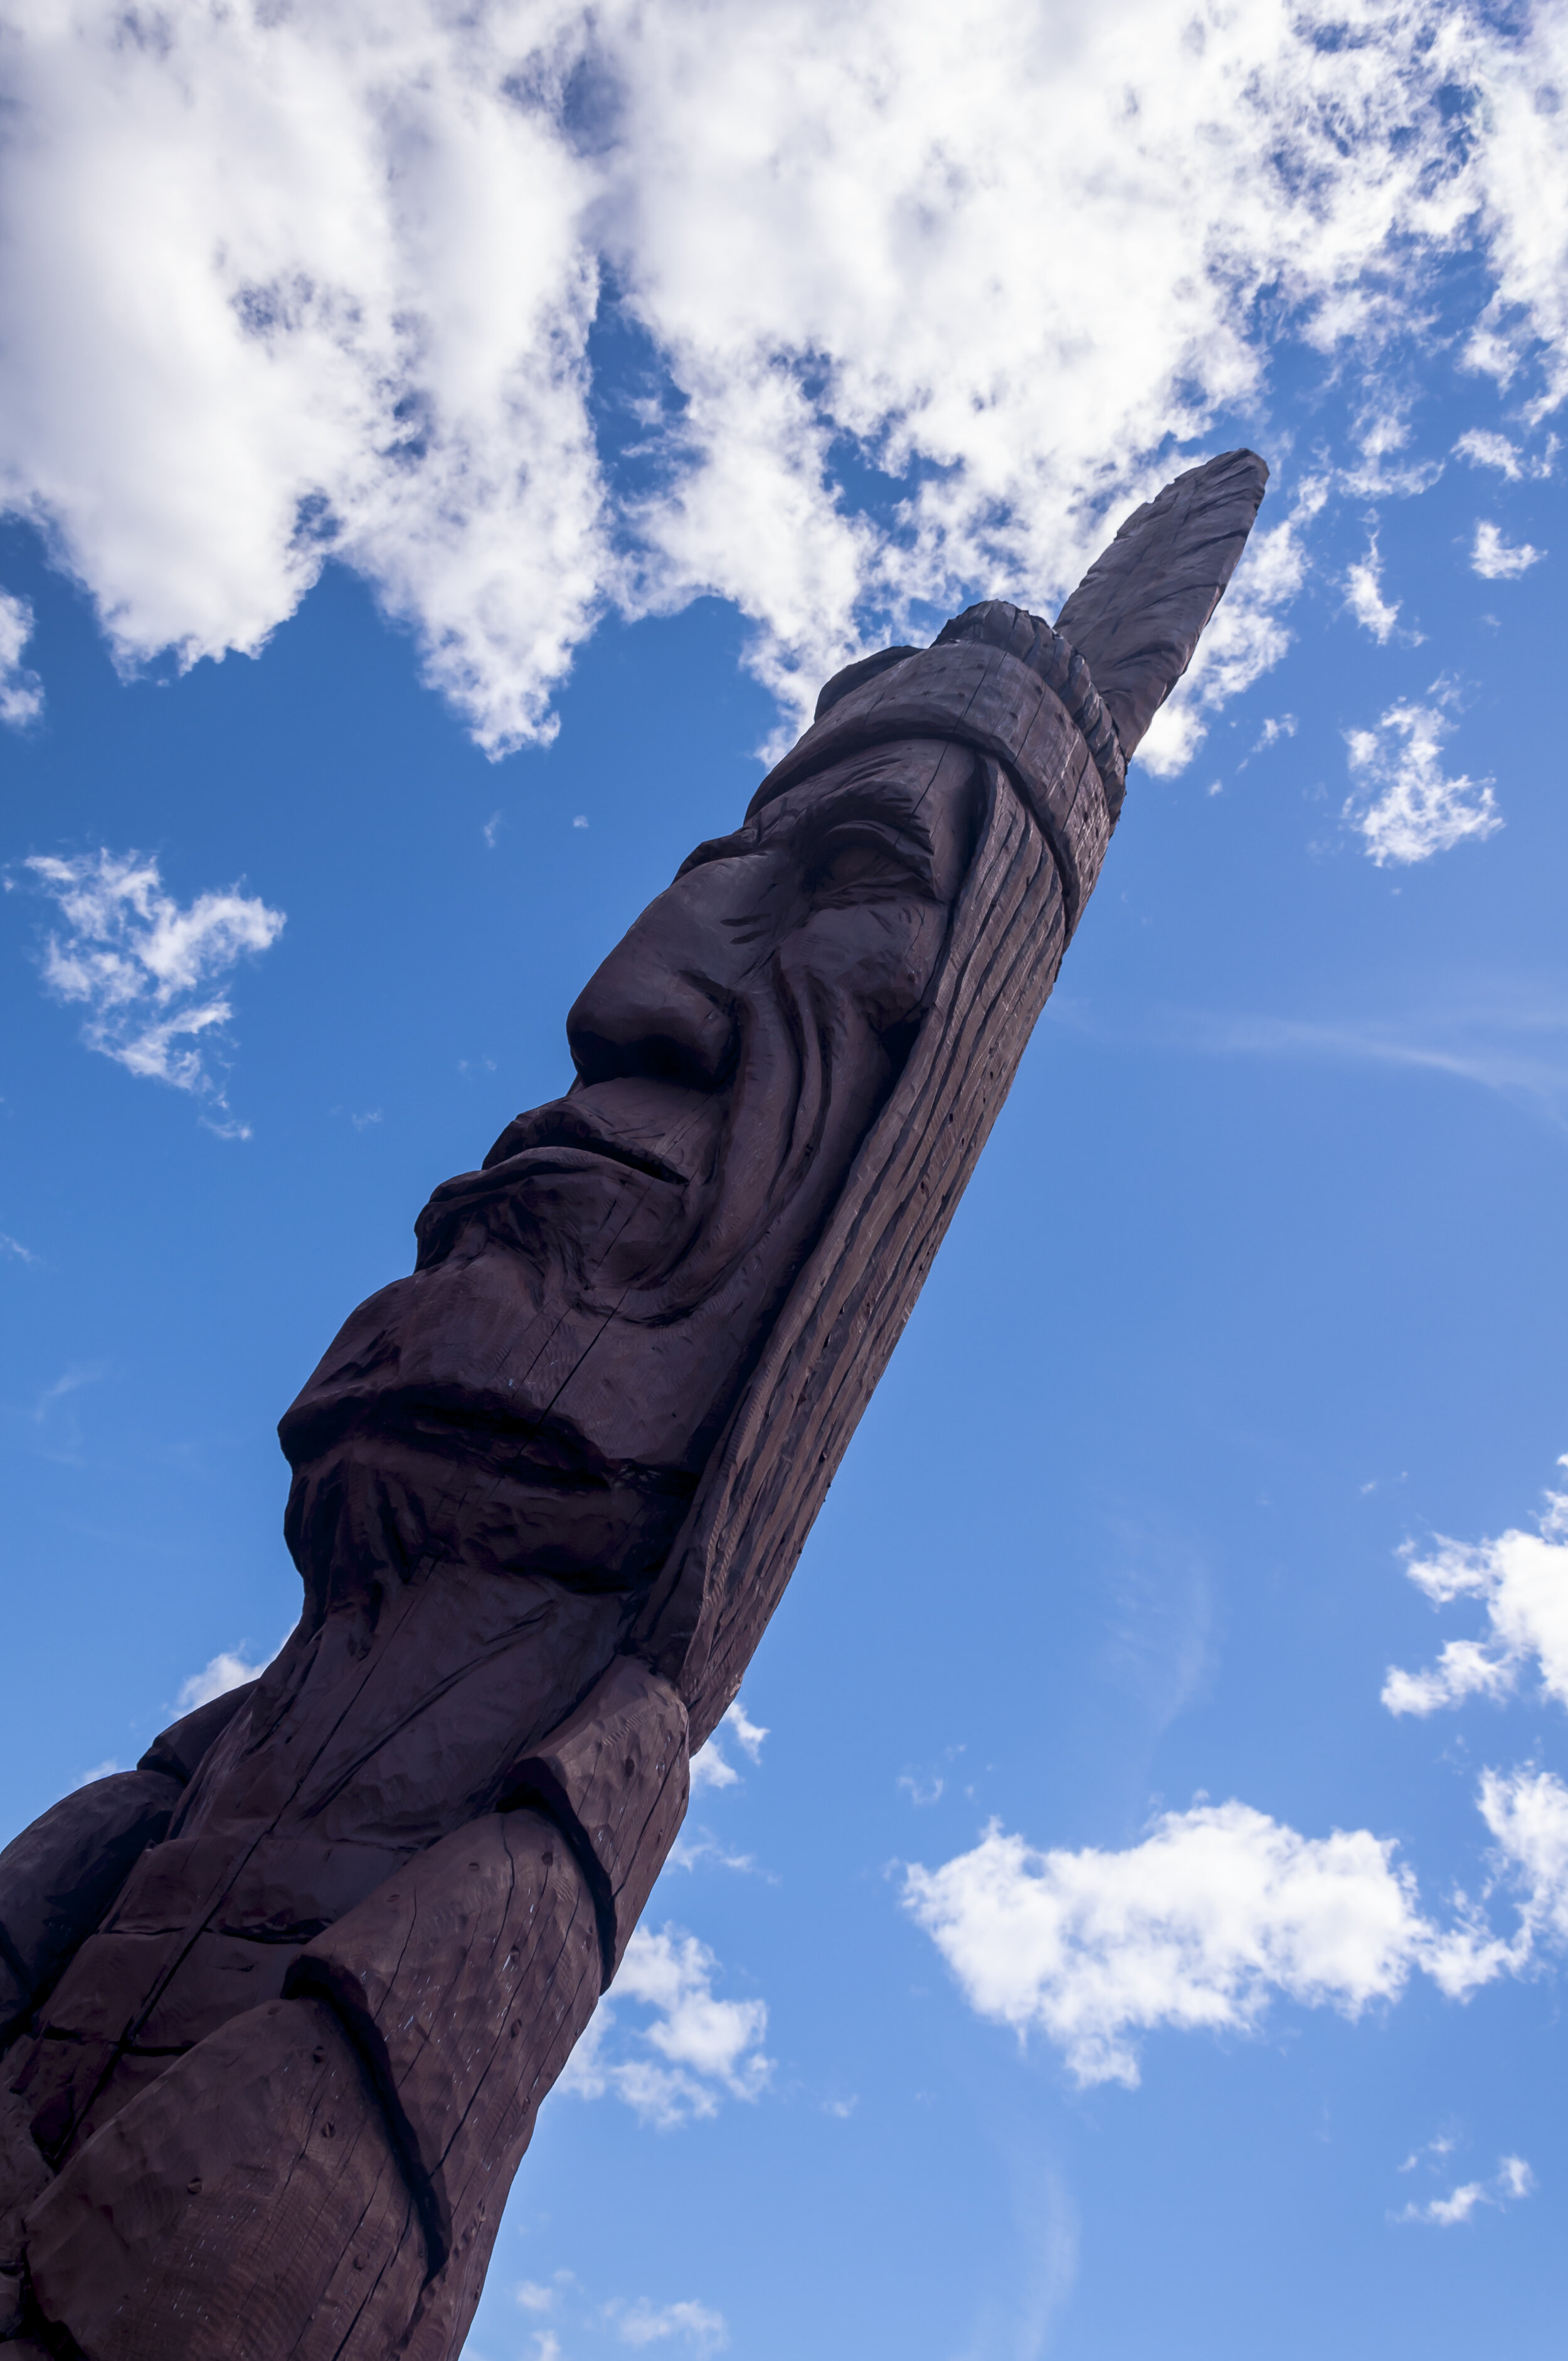  Sculpture of the American Indian neaar Two Harbors, Minnesota:Artist: Peter Toth 